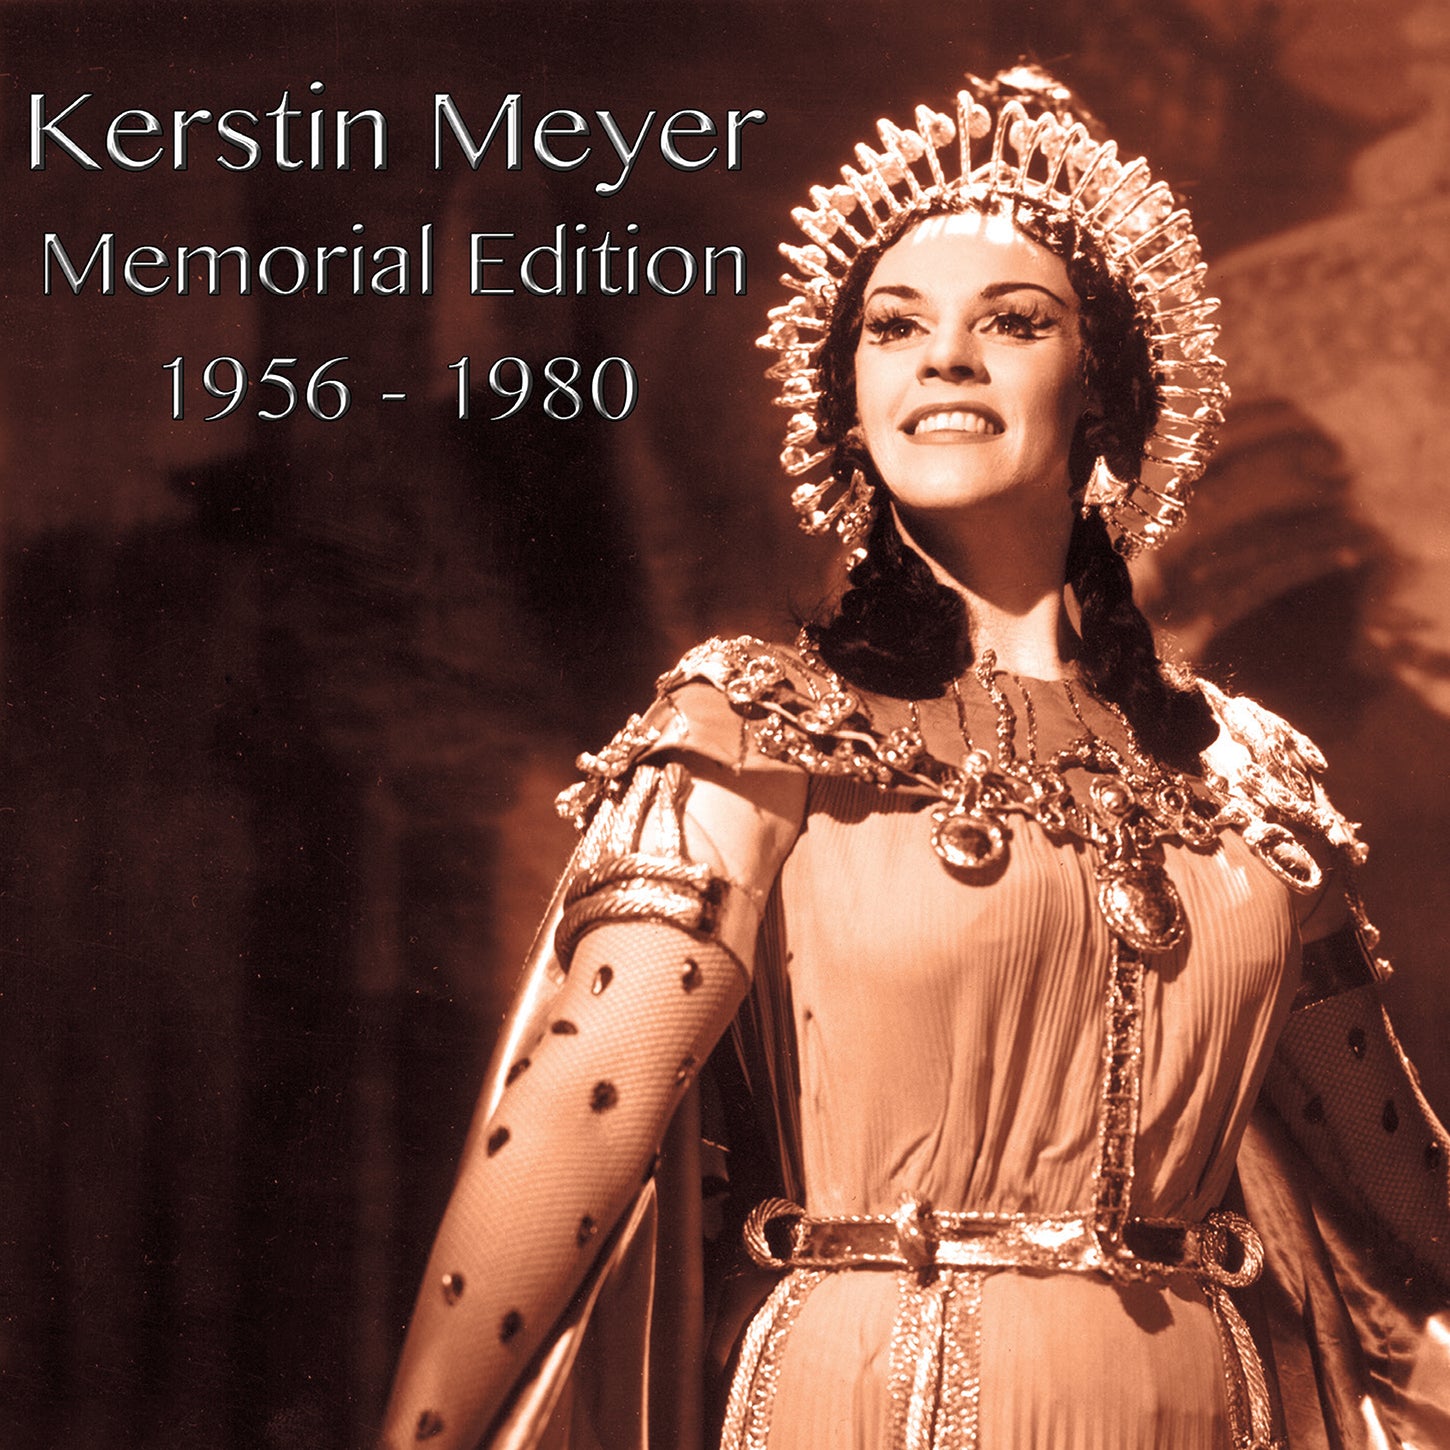 Grieg, Mahler, Mussorgsky et al.: Kerstin Meyer Memorial Edition, 1956-1980